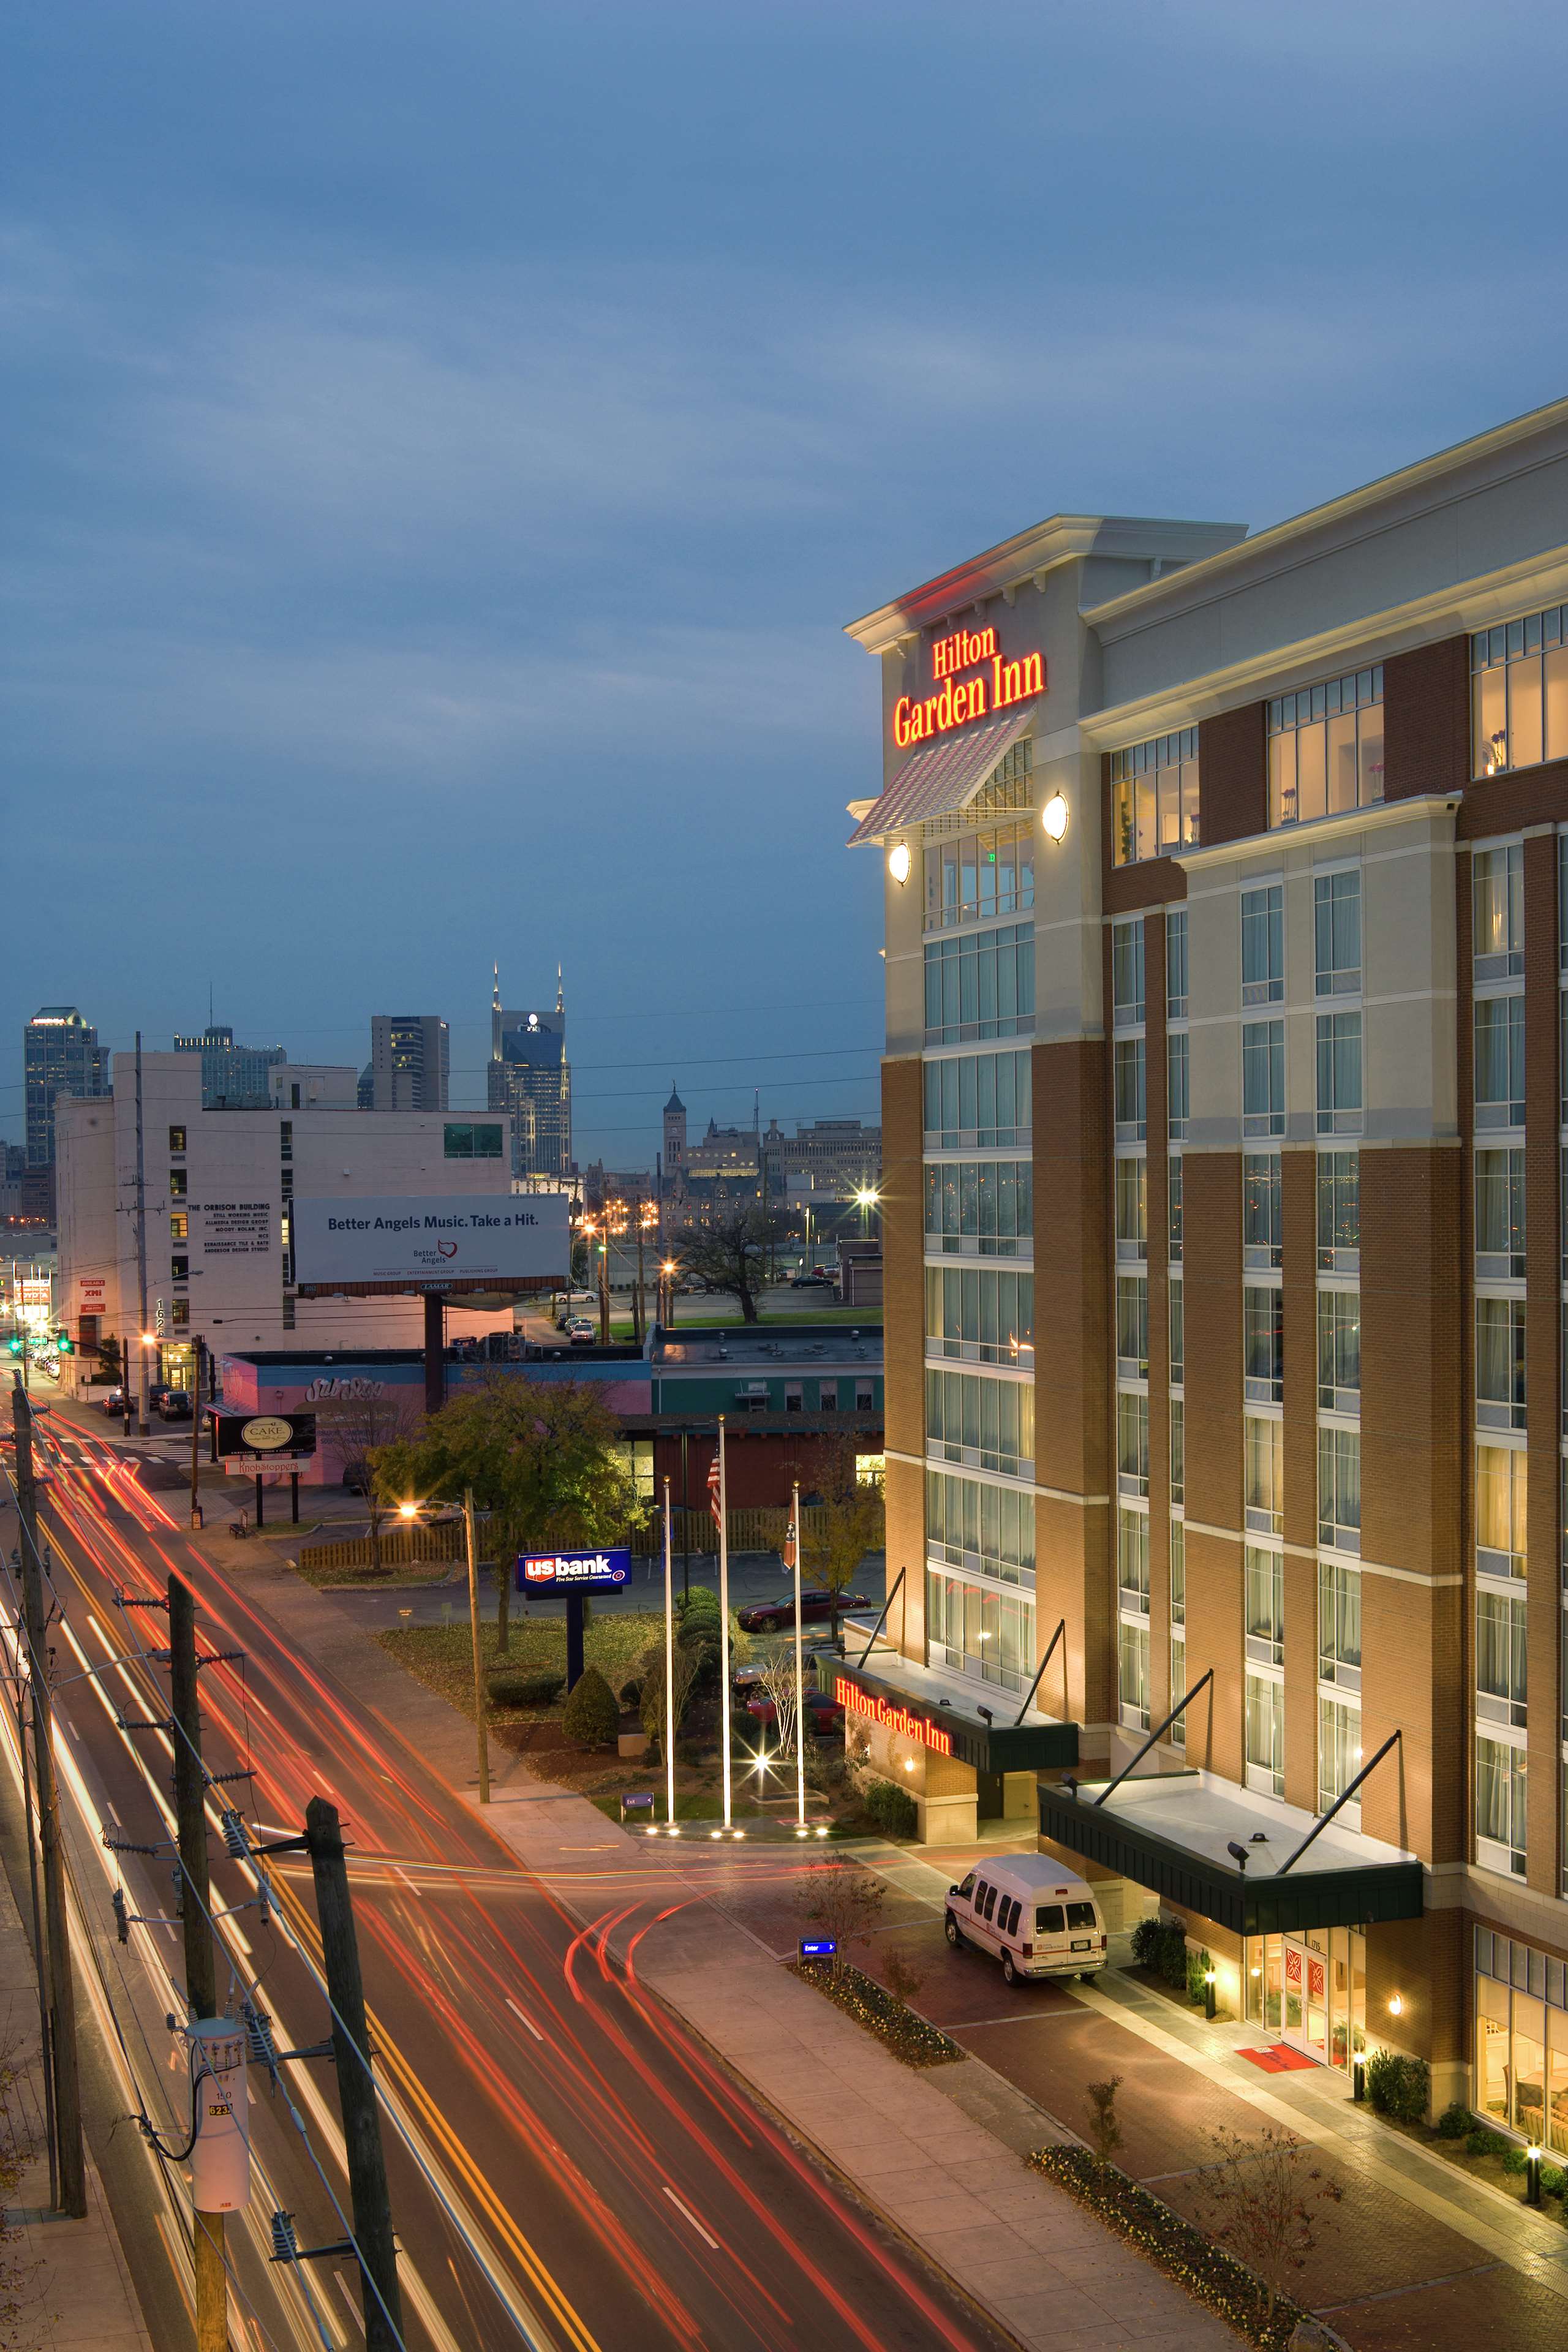 Hilton Garden Inn Nashville Vanderbilt 1715 Broadway Nashville Tn Hotels And Motels Mapquest